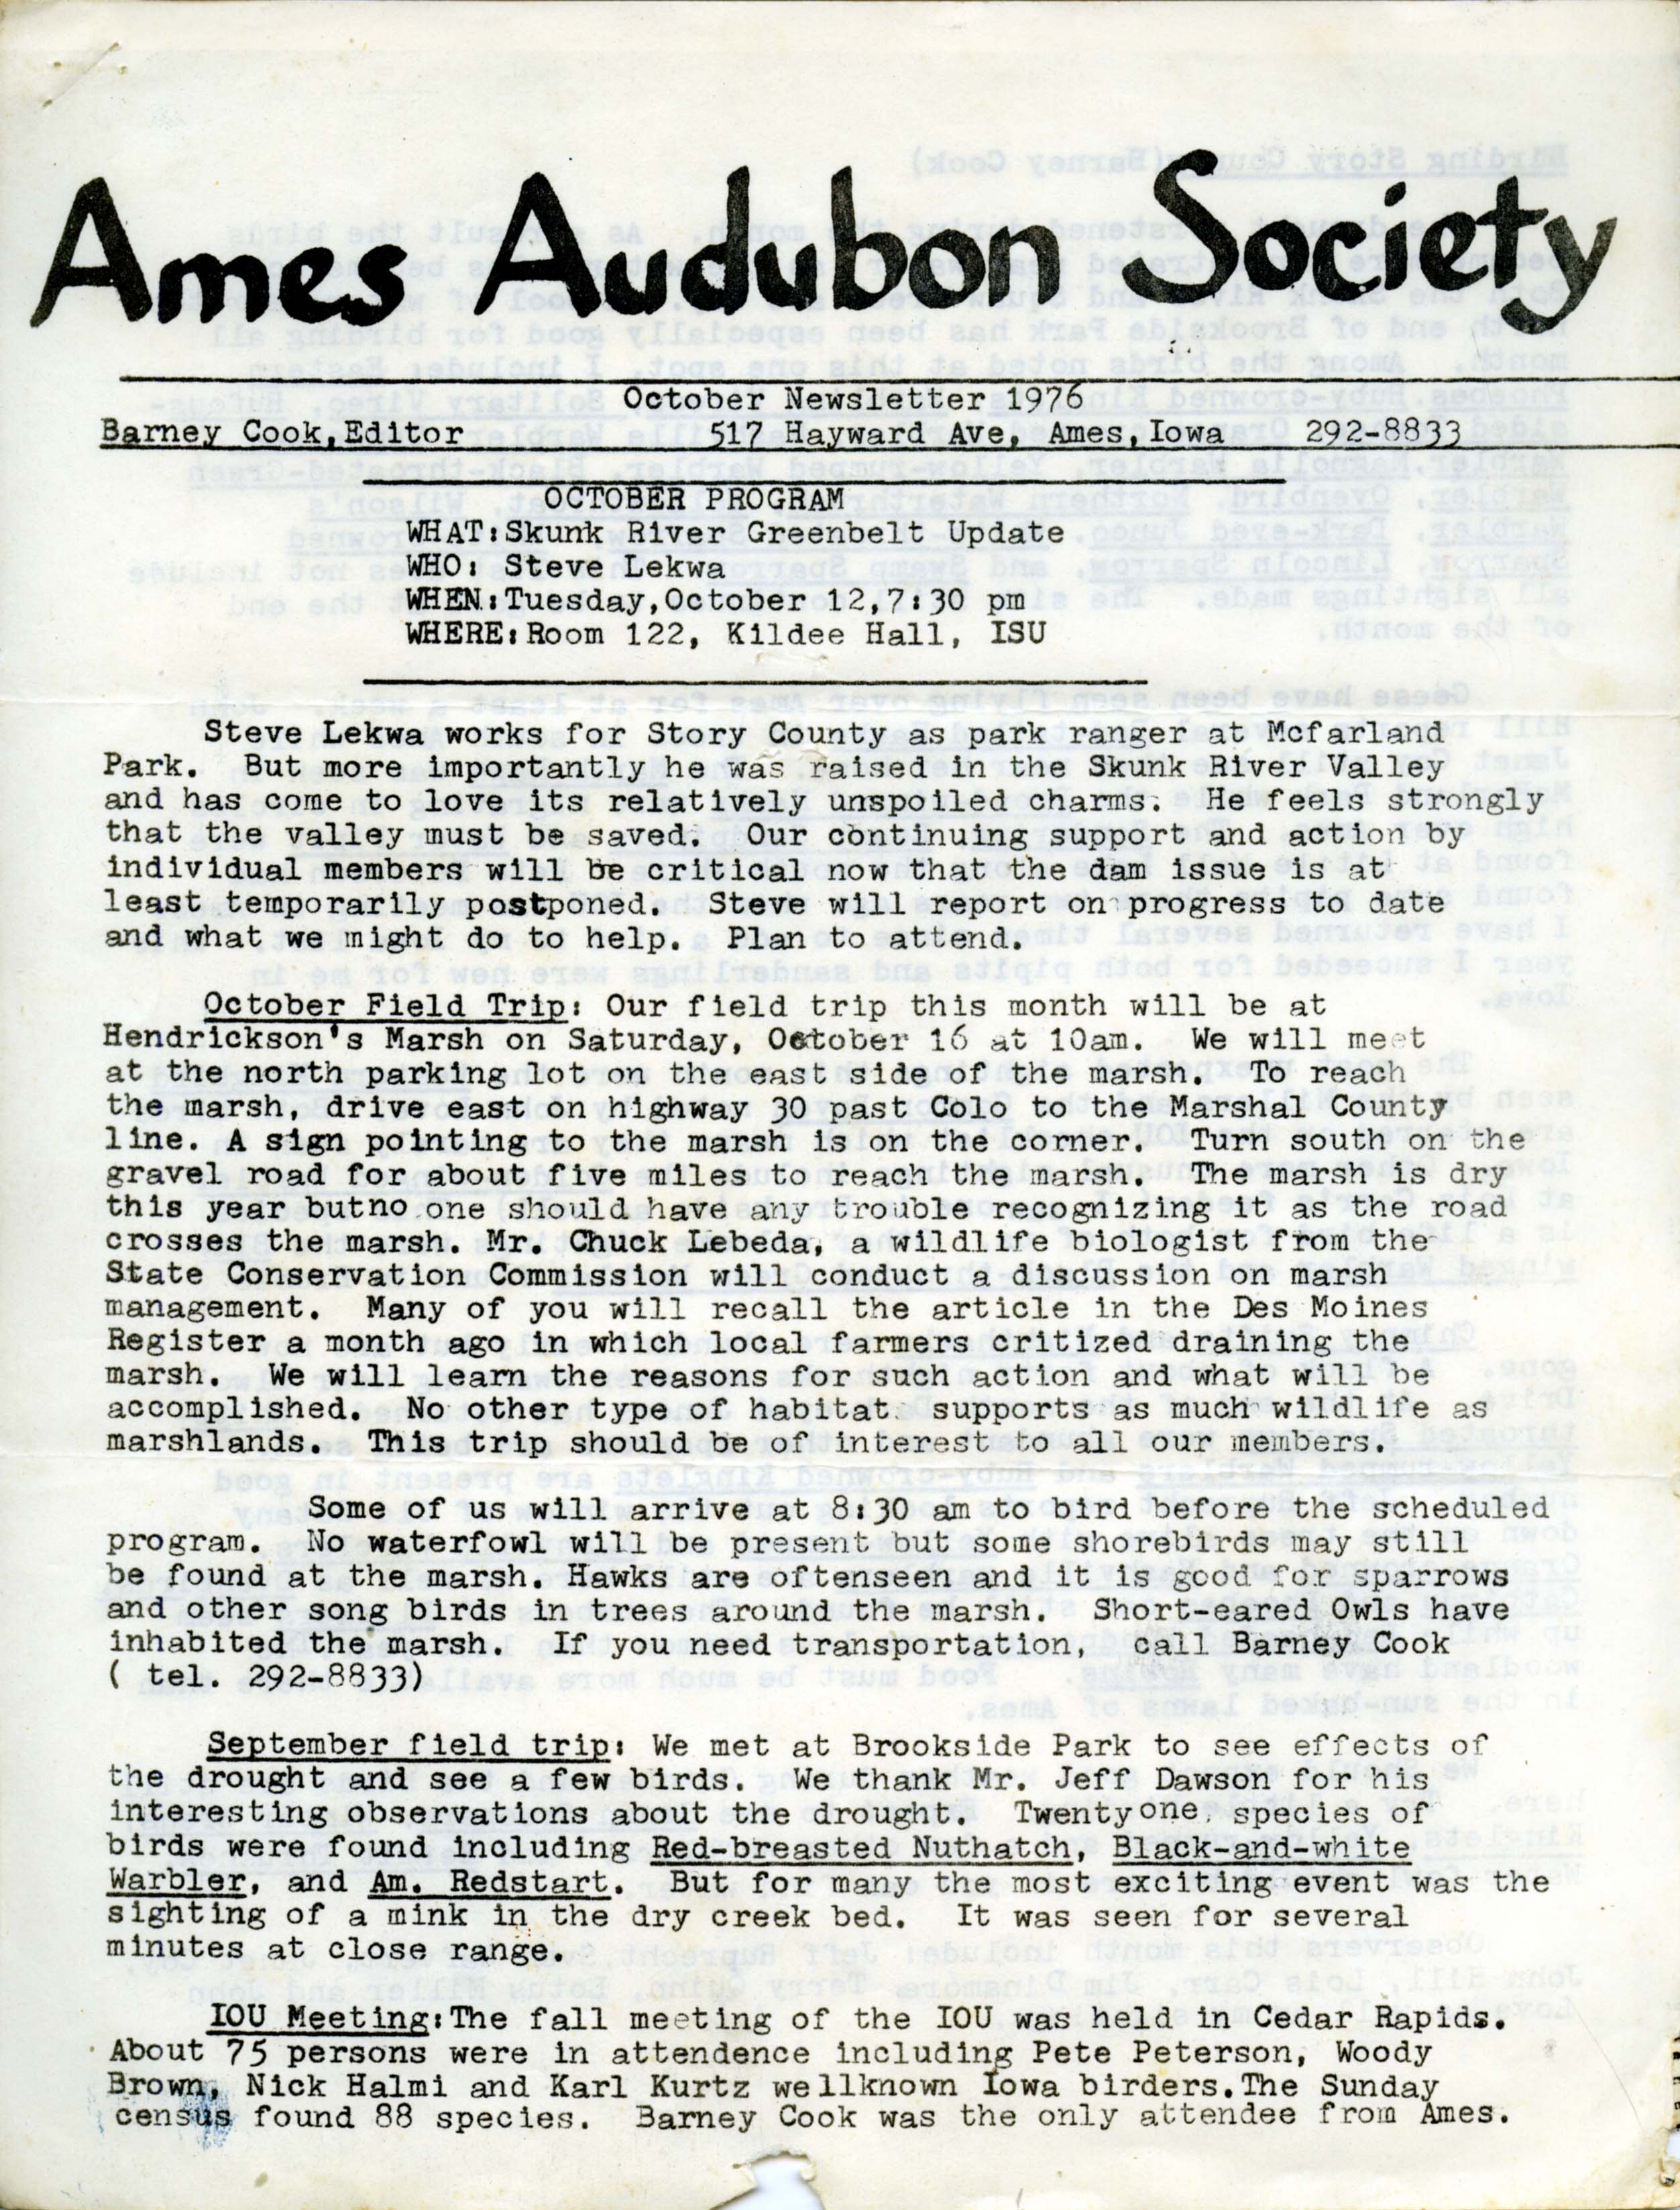 Ames Audubon Society October Newsletter, 1976